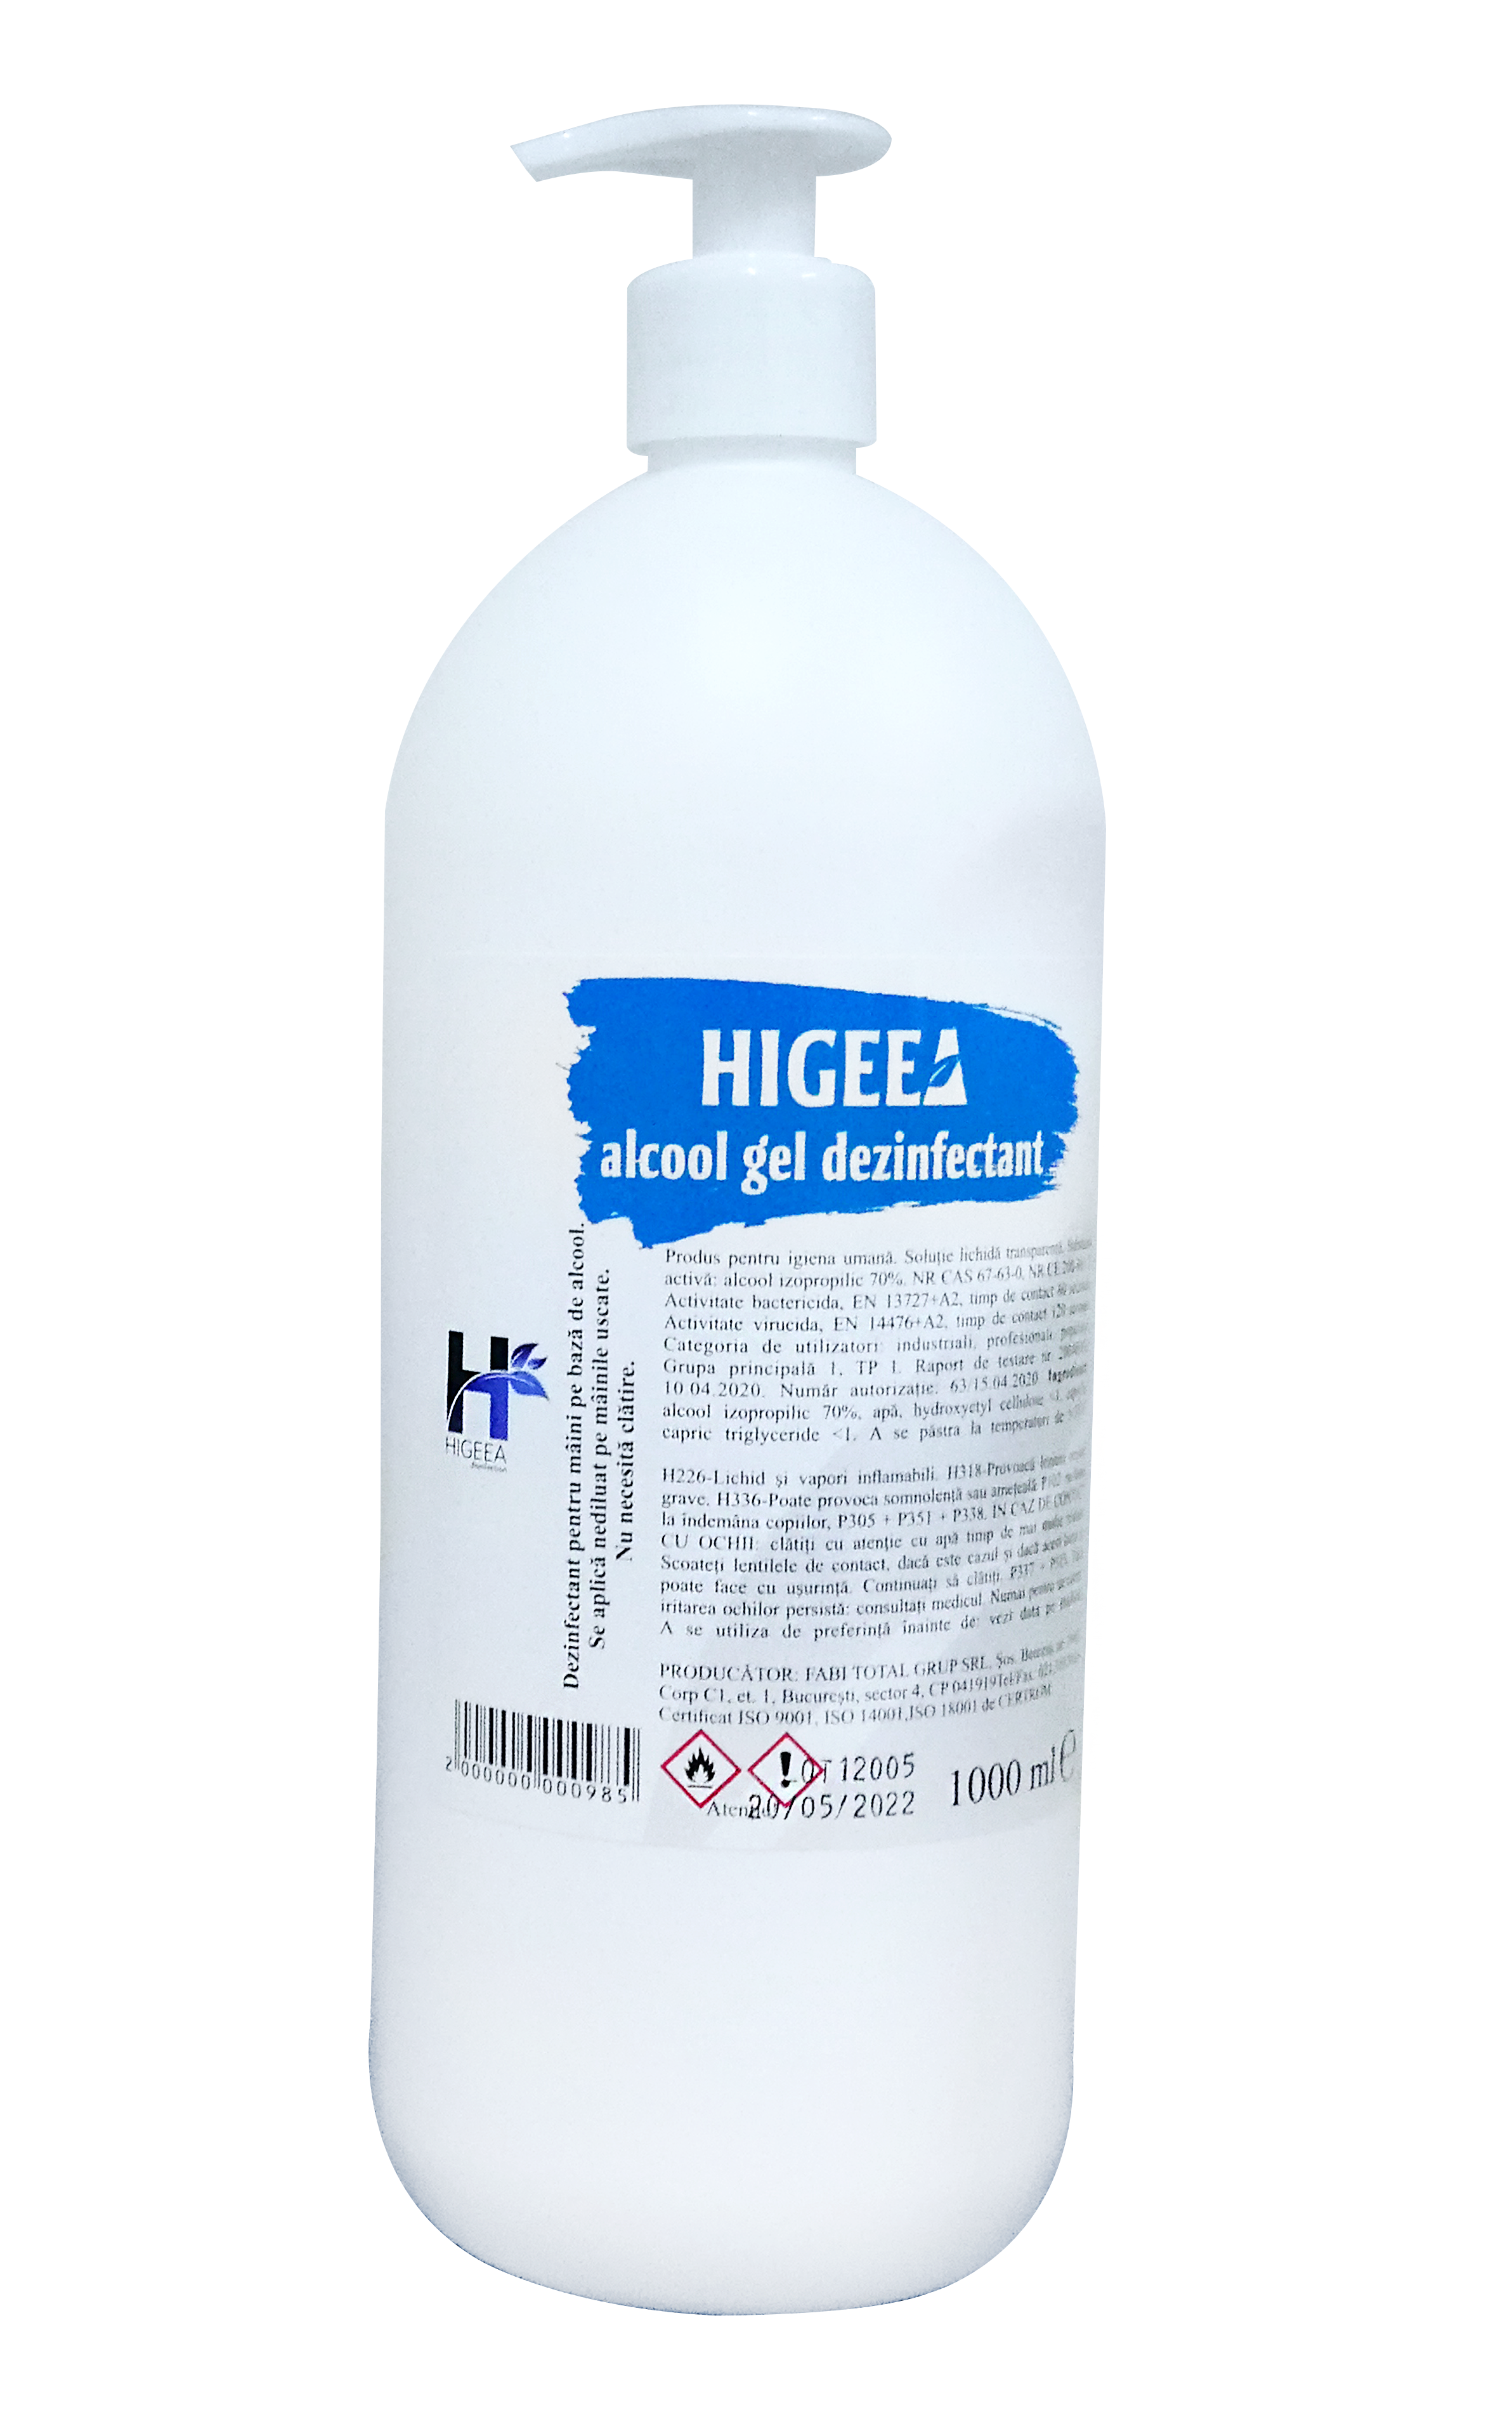 Higeea Alcool gel dezinfectant virucid pentru maini cu pompita 1L sanito.ro